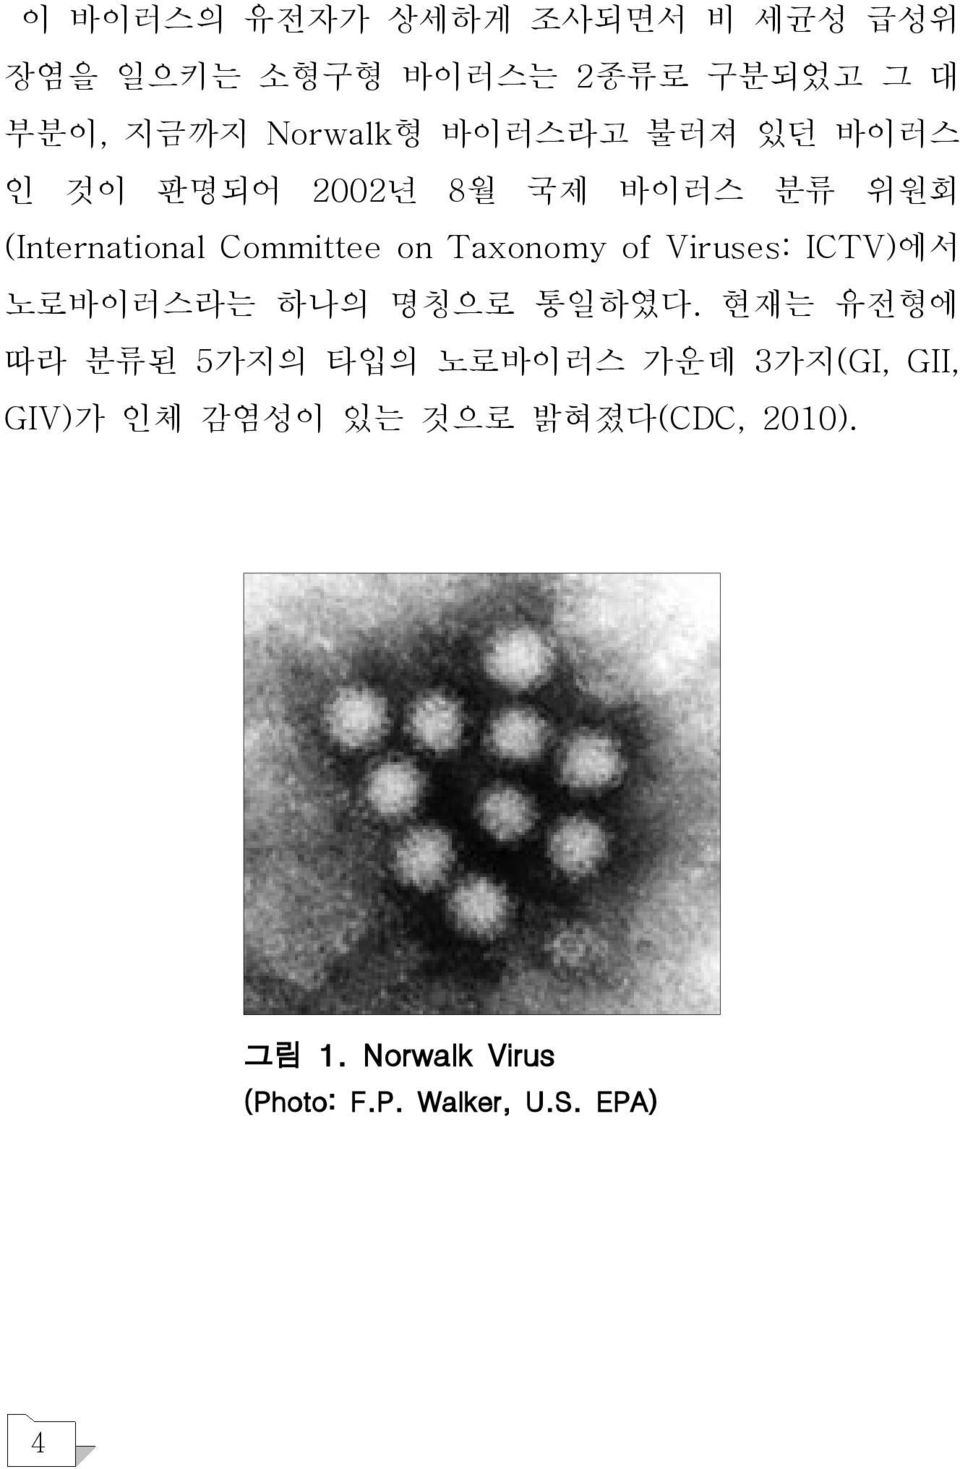 of Viruses: ICTV)에서 노로바이러스라는 하나의 명칭으로 통일하였다.